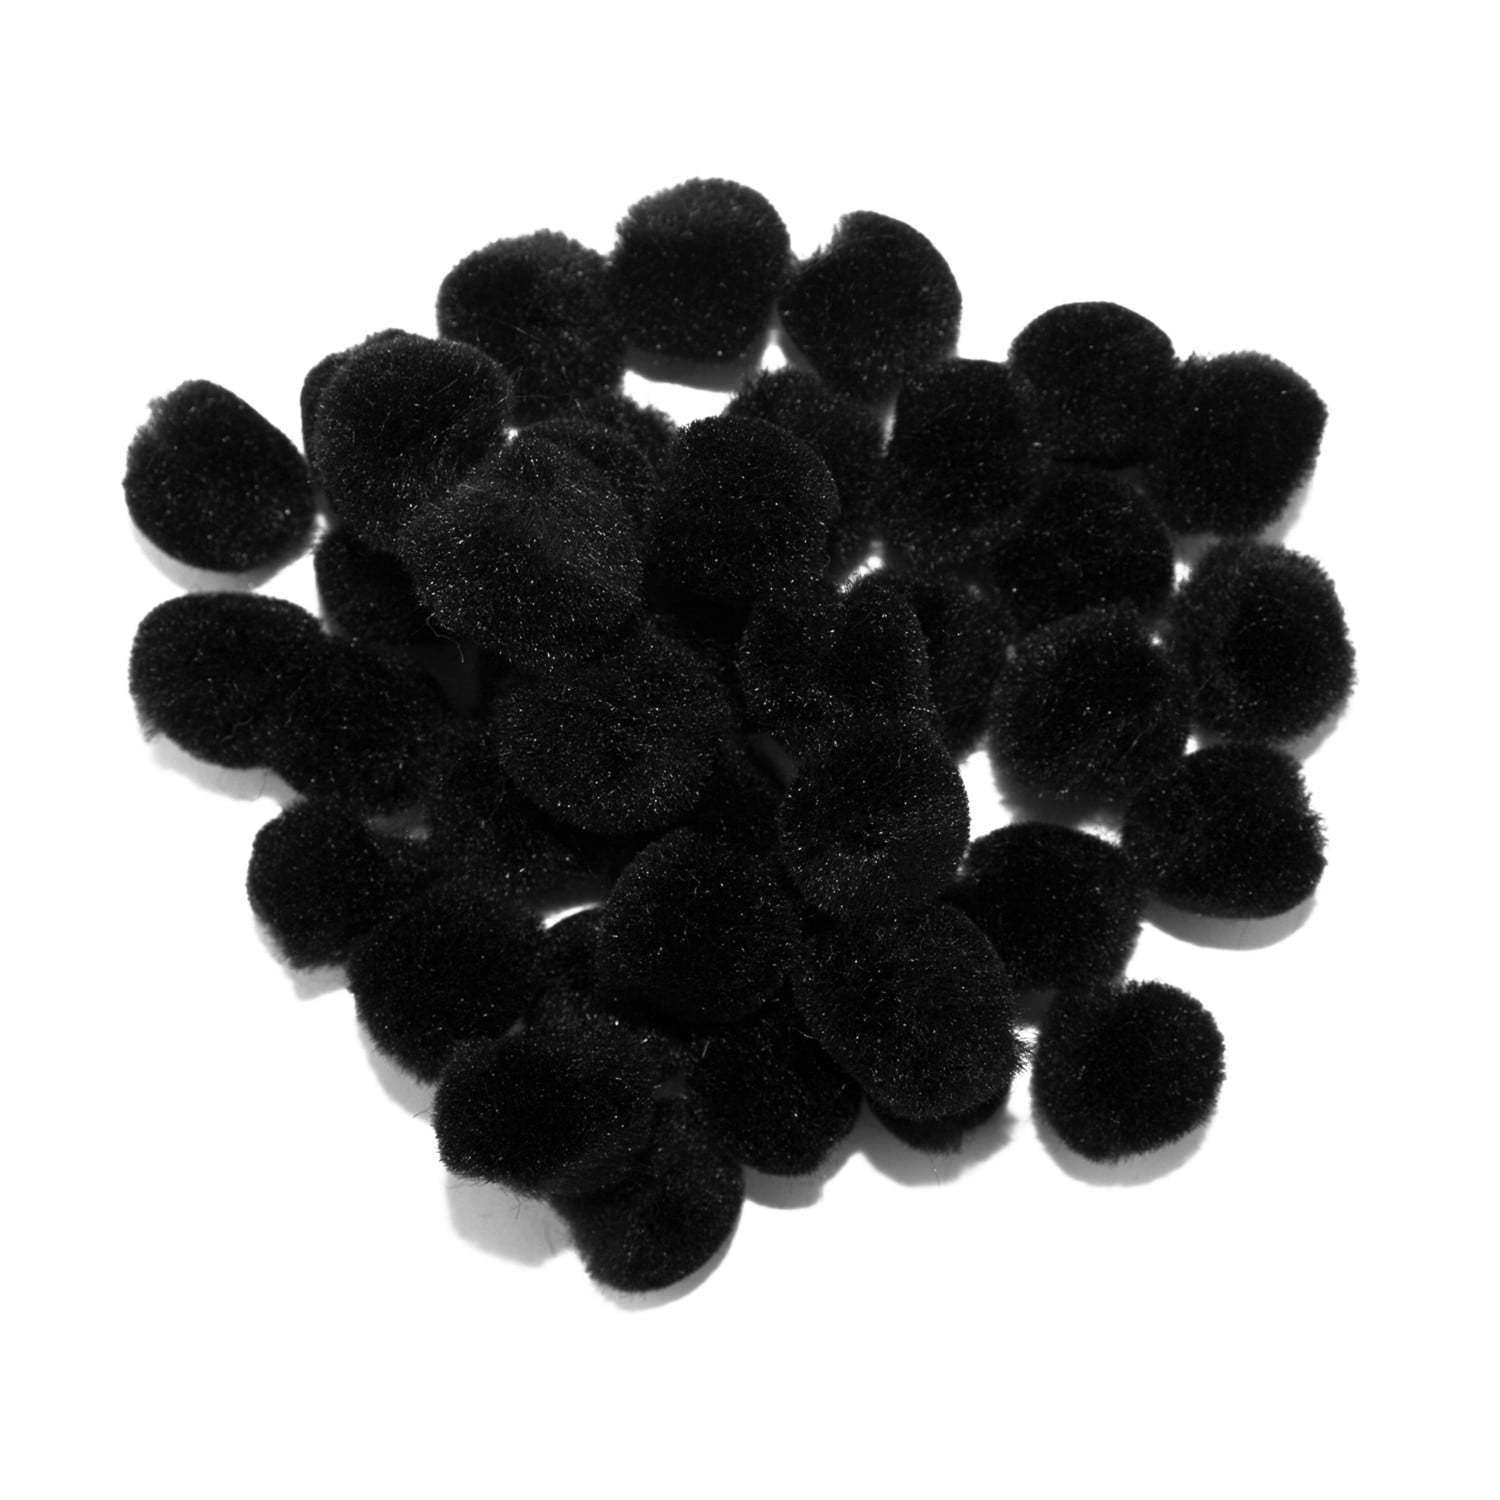 2.5 Inch Black Large Craft Pom Poms Bulk 1,000 Pieces